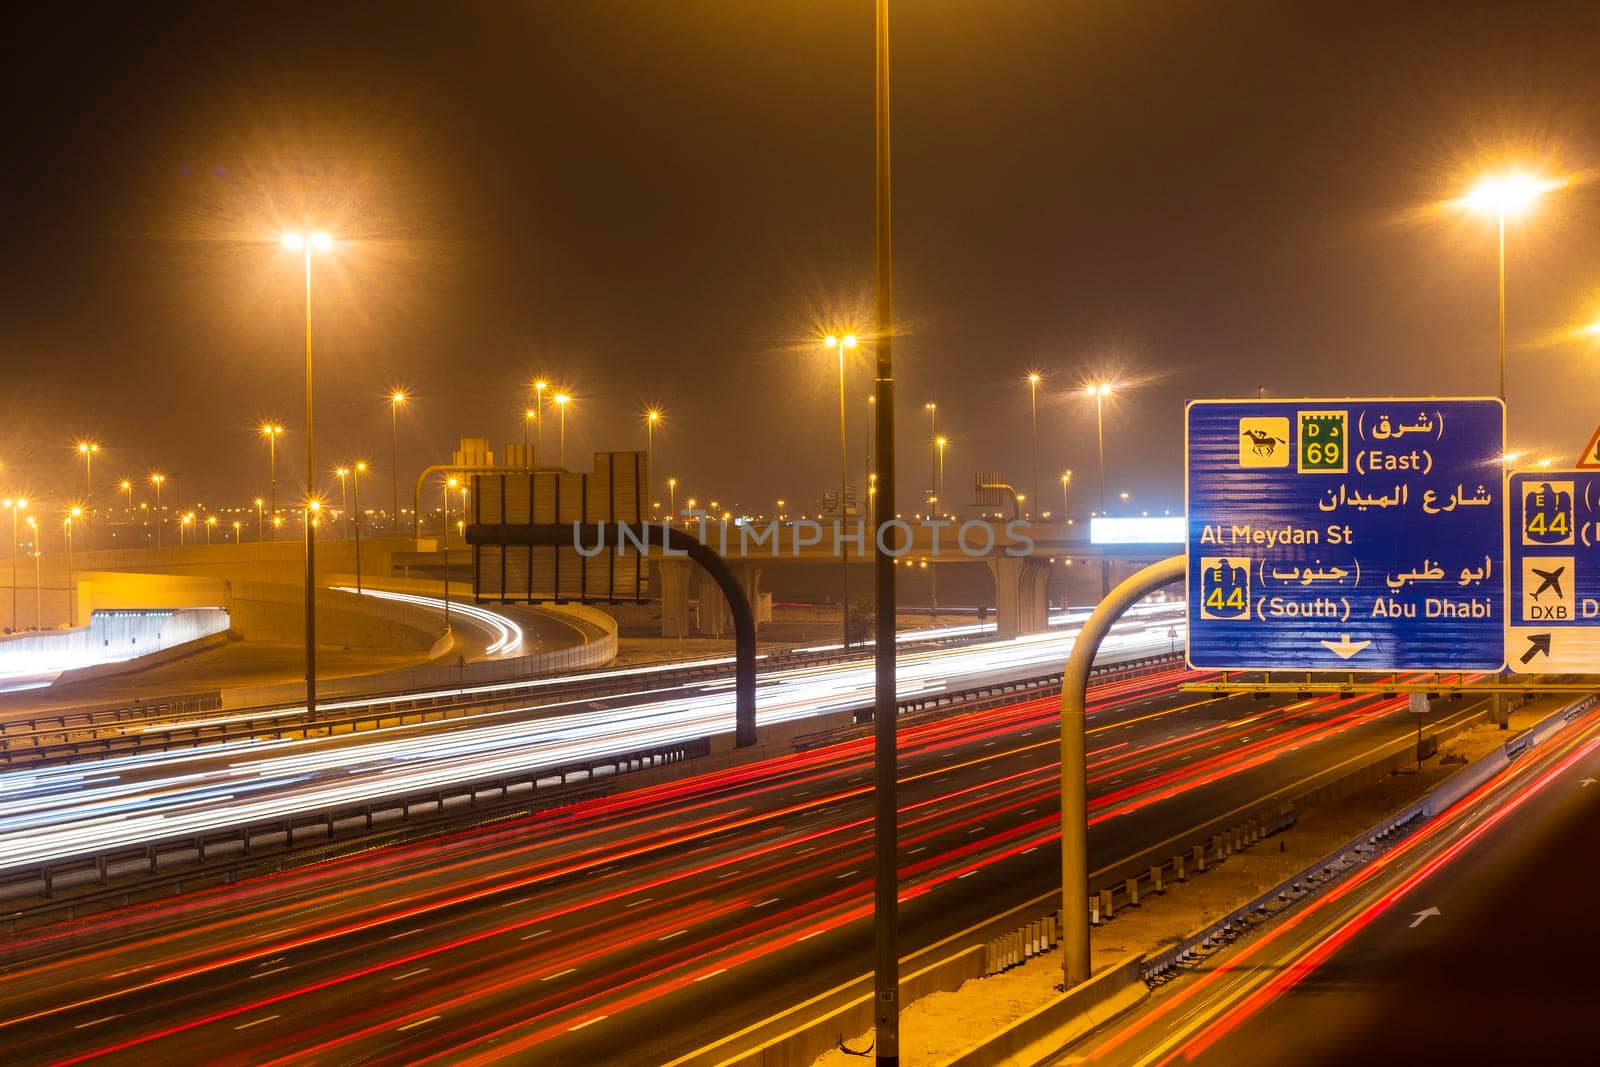 Dubai, UAE - 06.04.2021 Light trails on Al Khail road at night